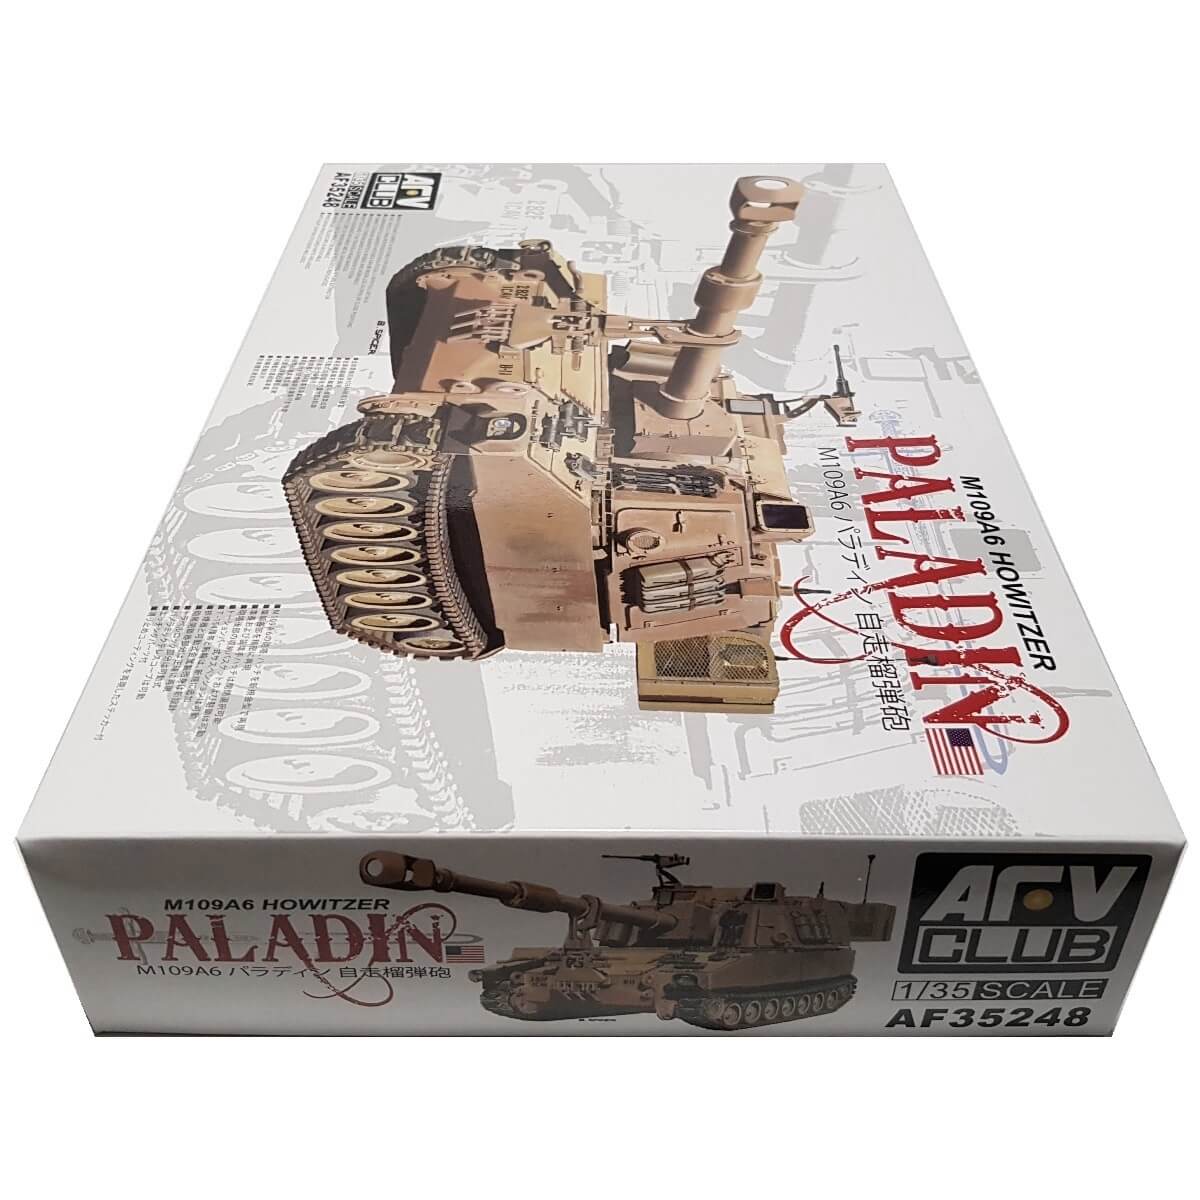 1:35 M109A6 Howitzer PALADIN - AFV CLUB